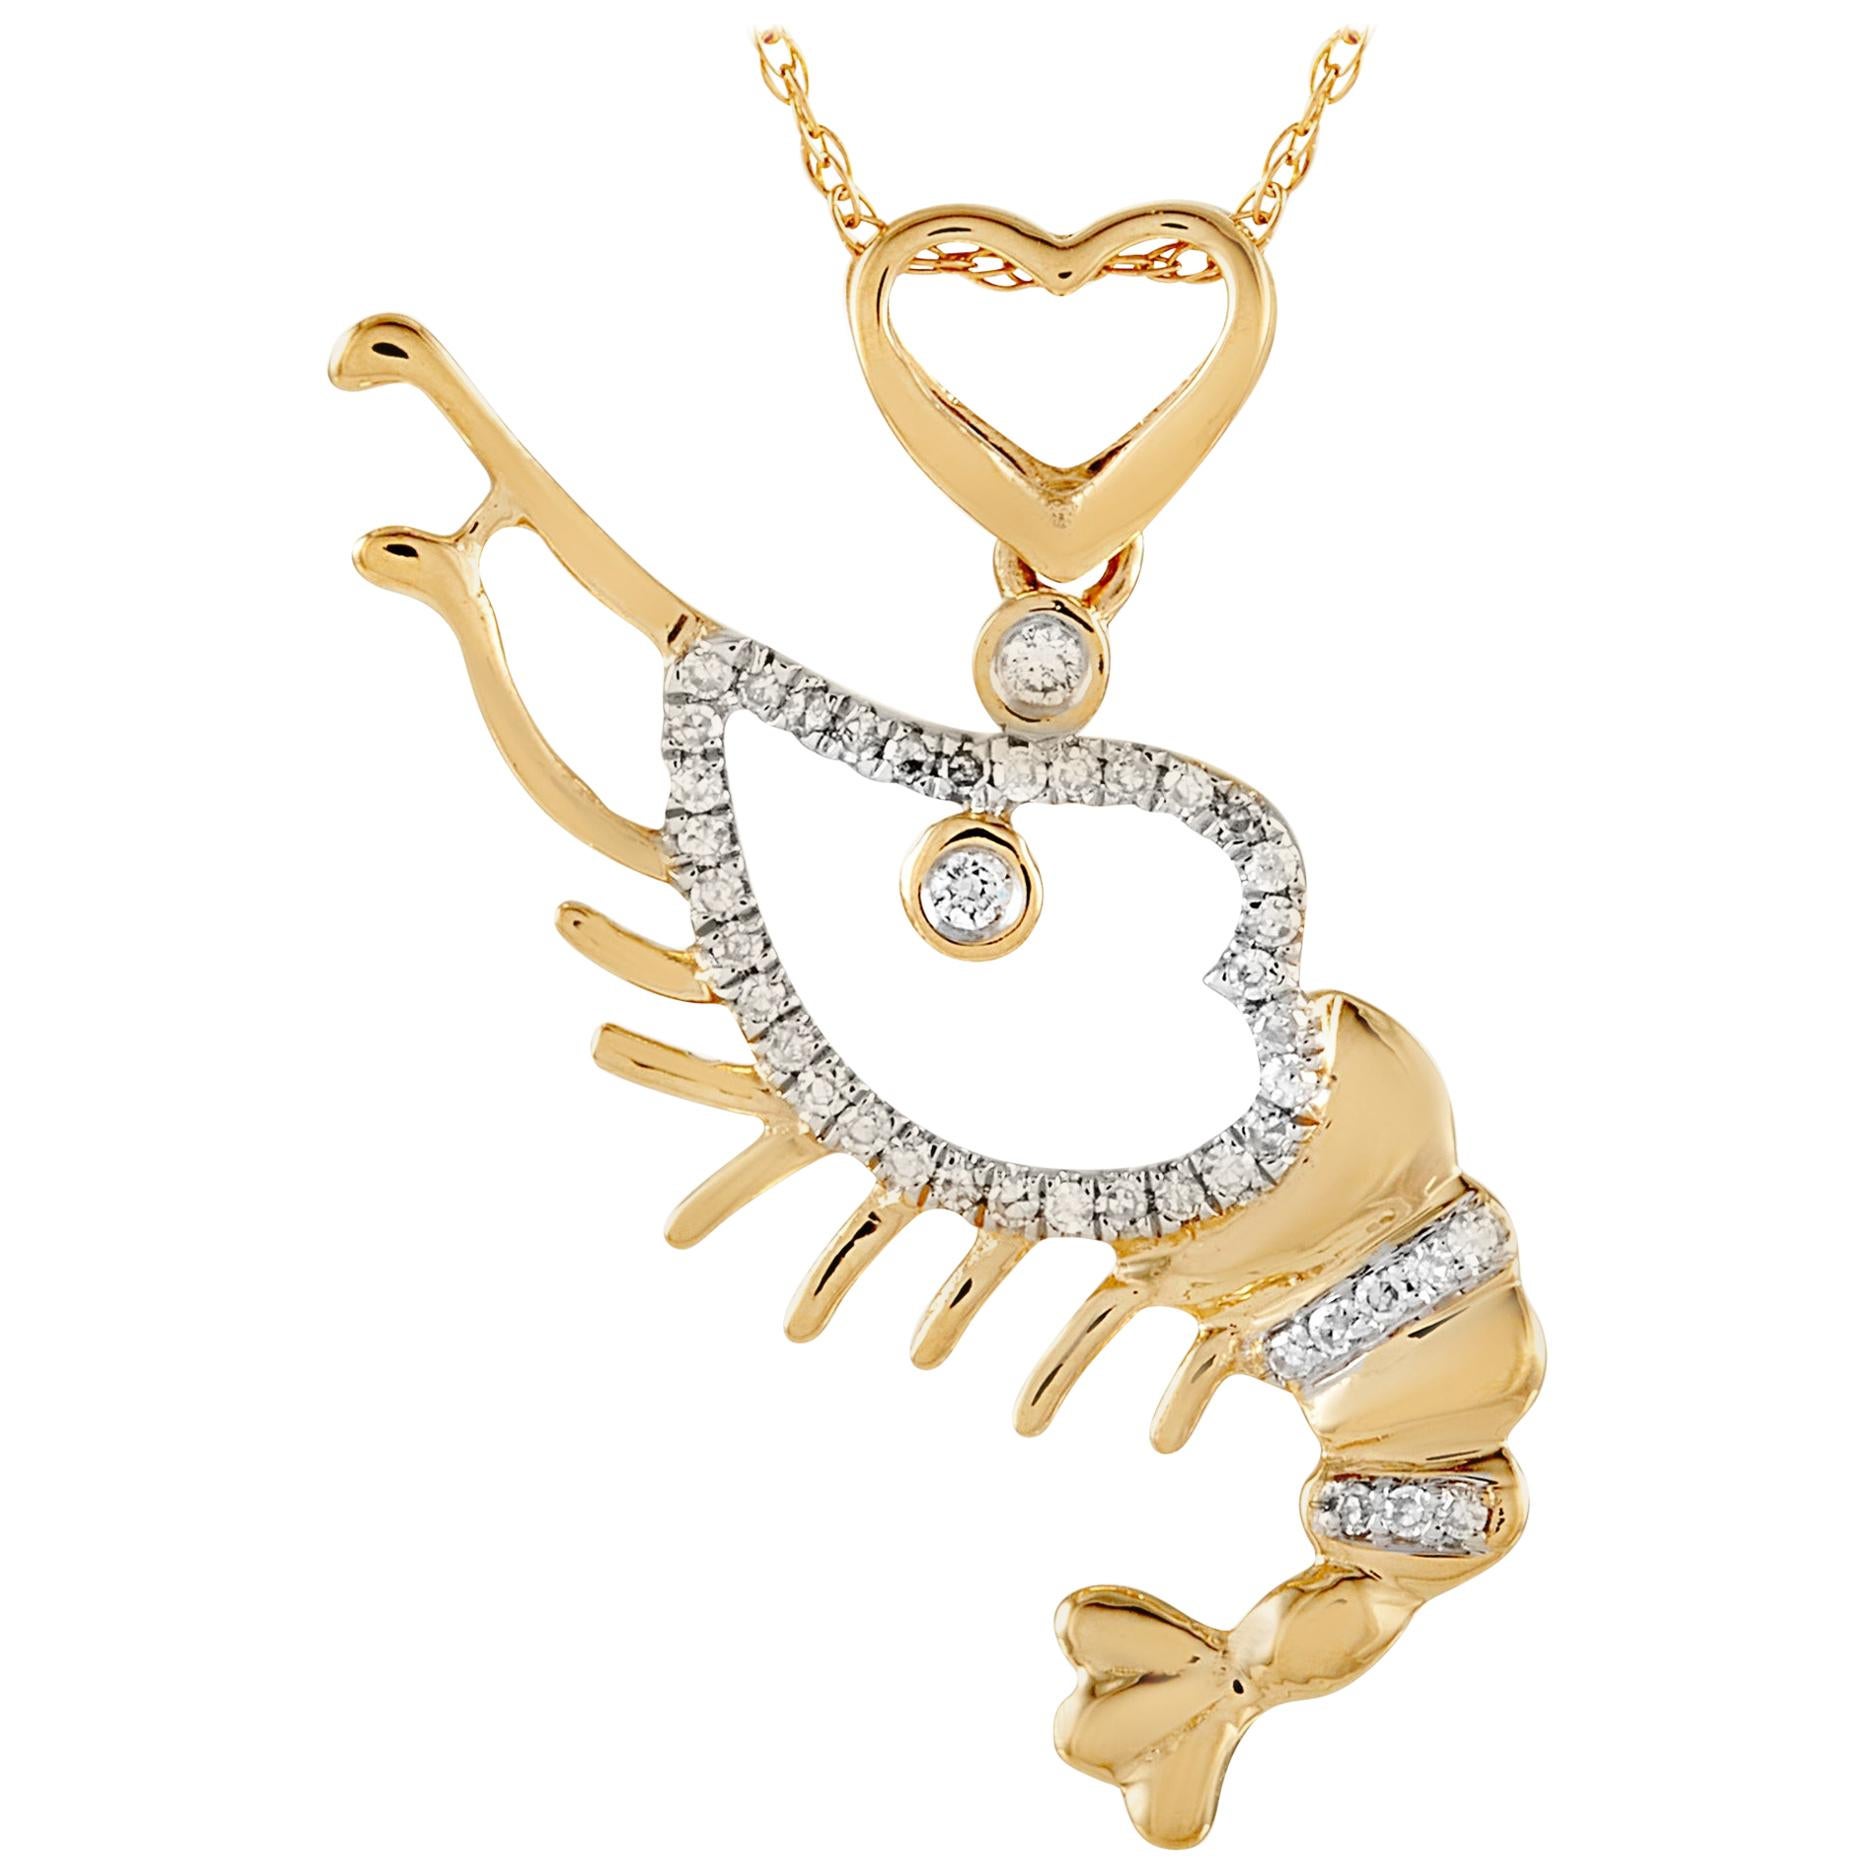 LB Exclusive 14 Karat Yellow Gold 0.14 Carat Diamond Pendant Necklace